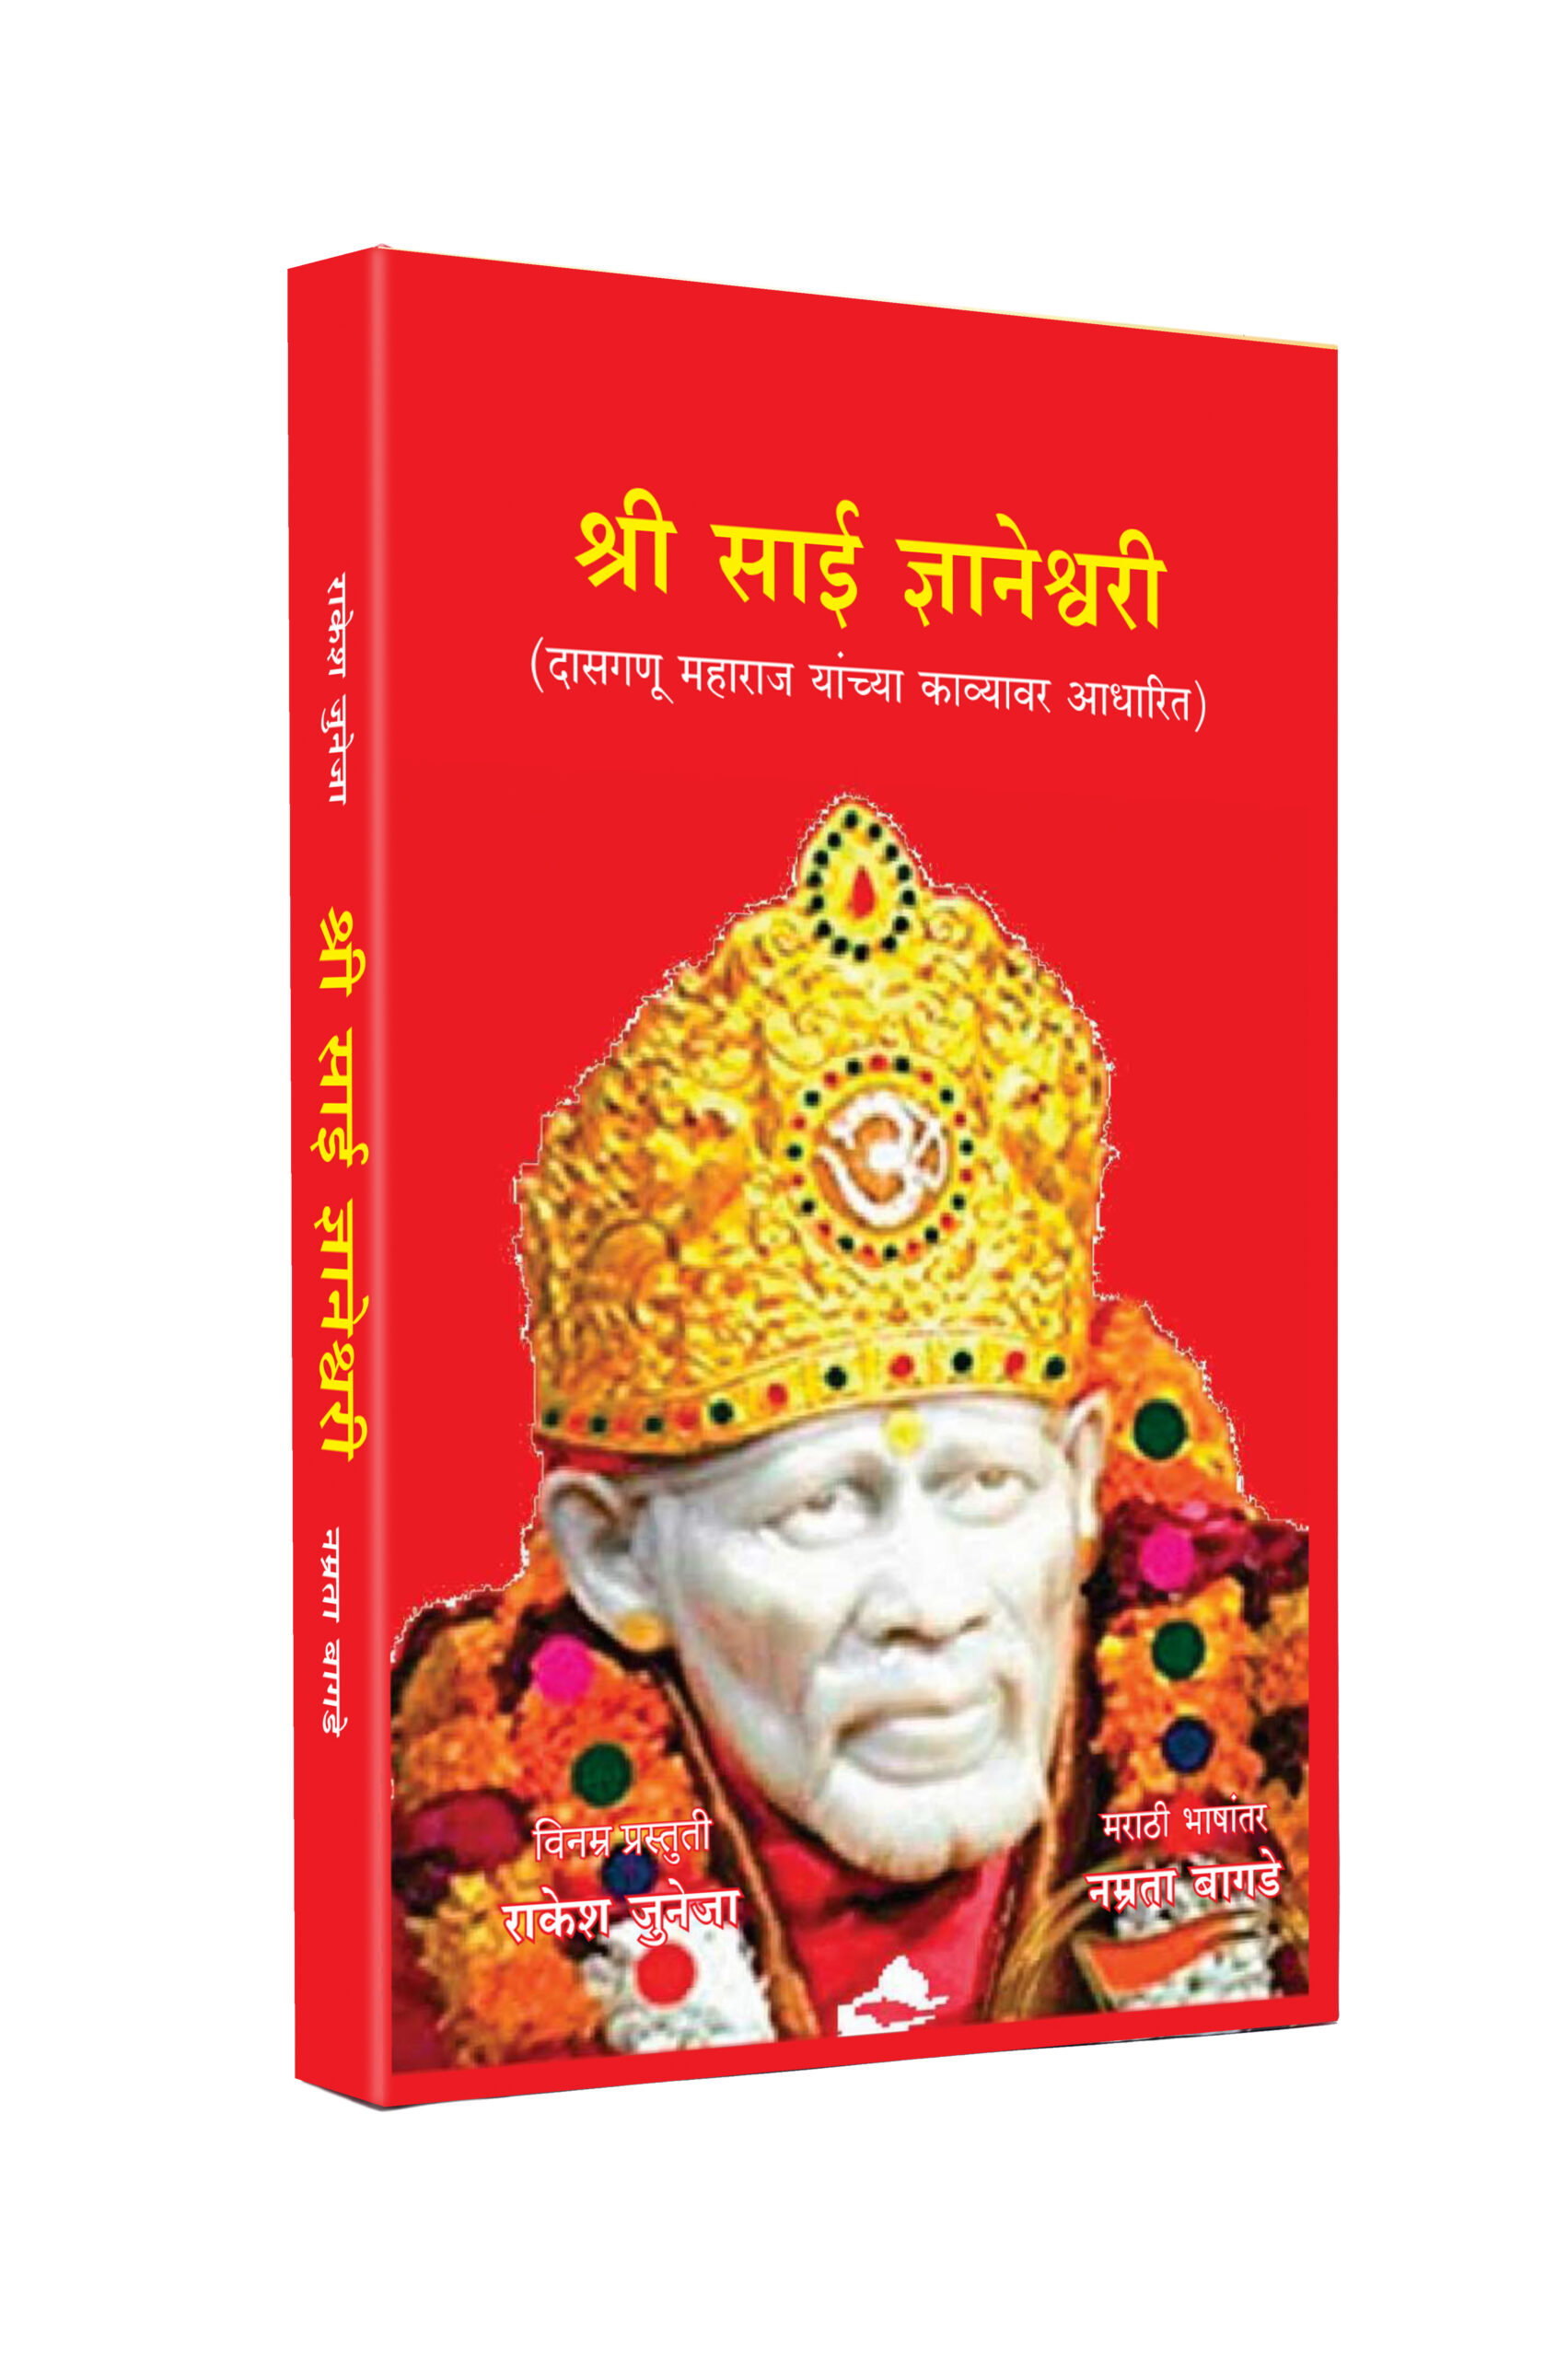 Sai Gyaneshwari Hindi books